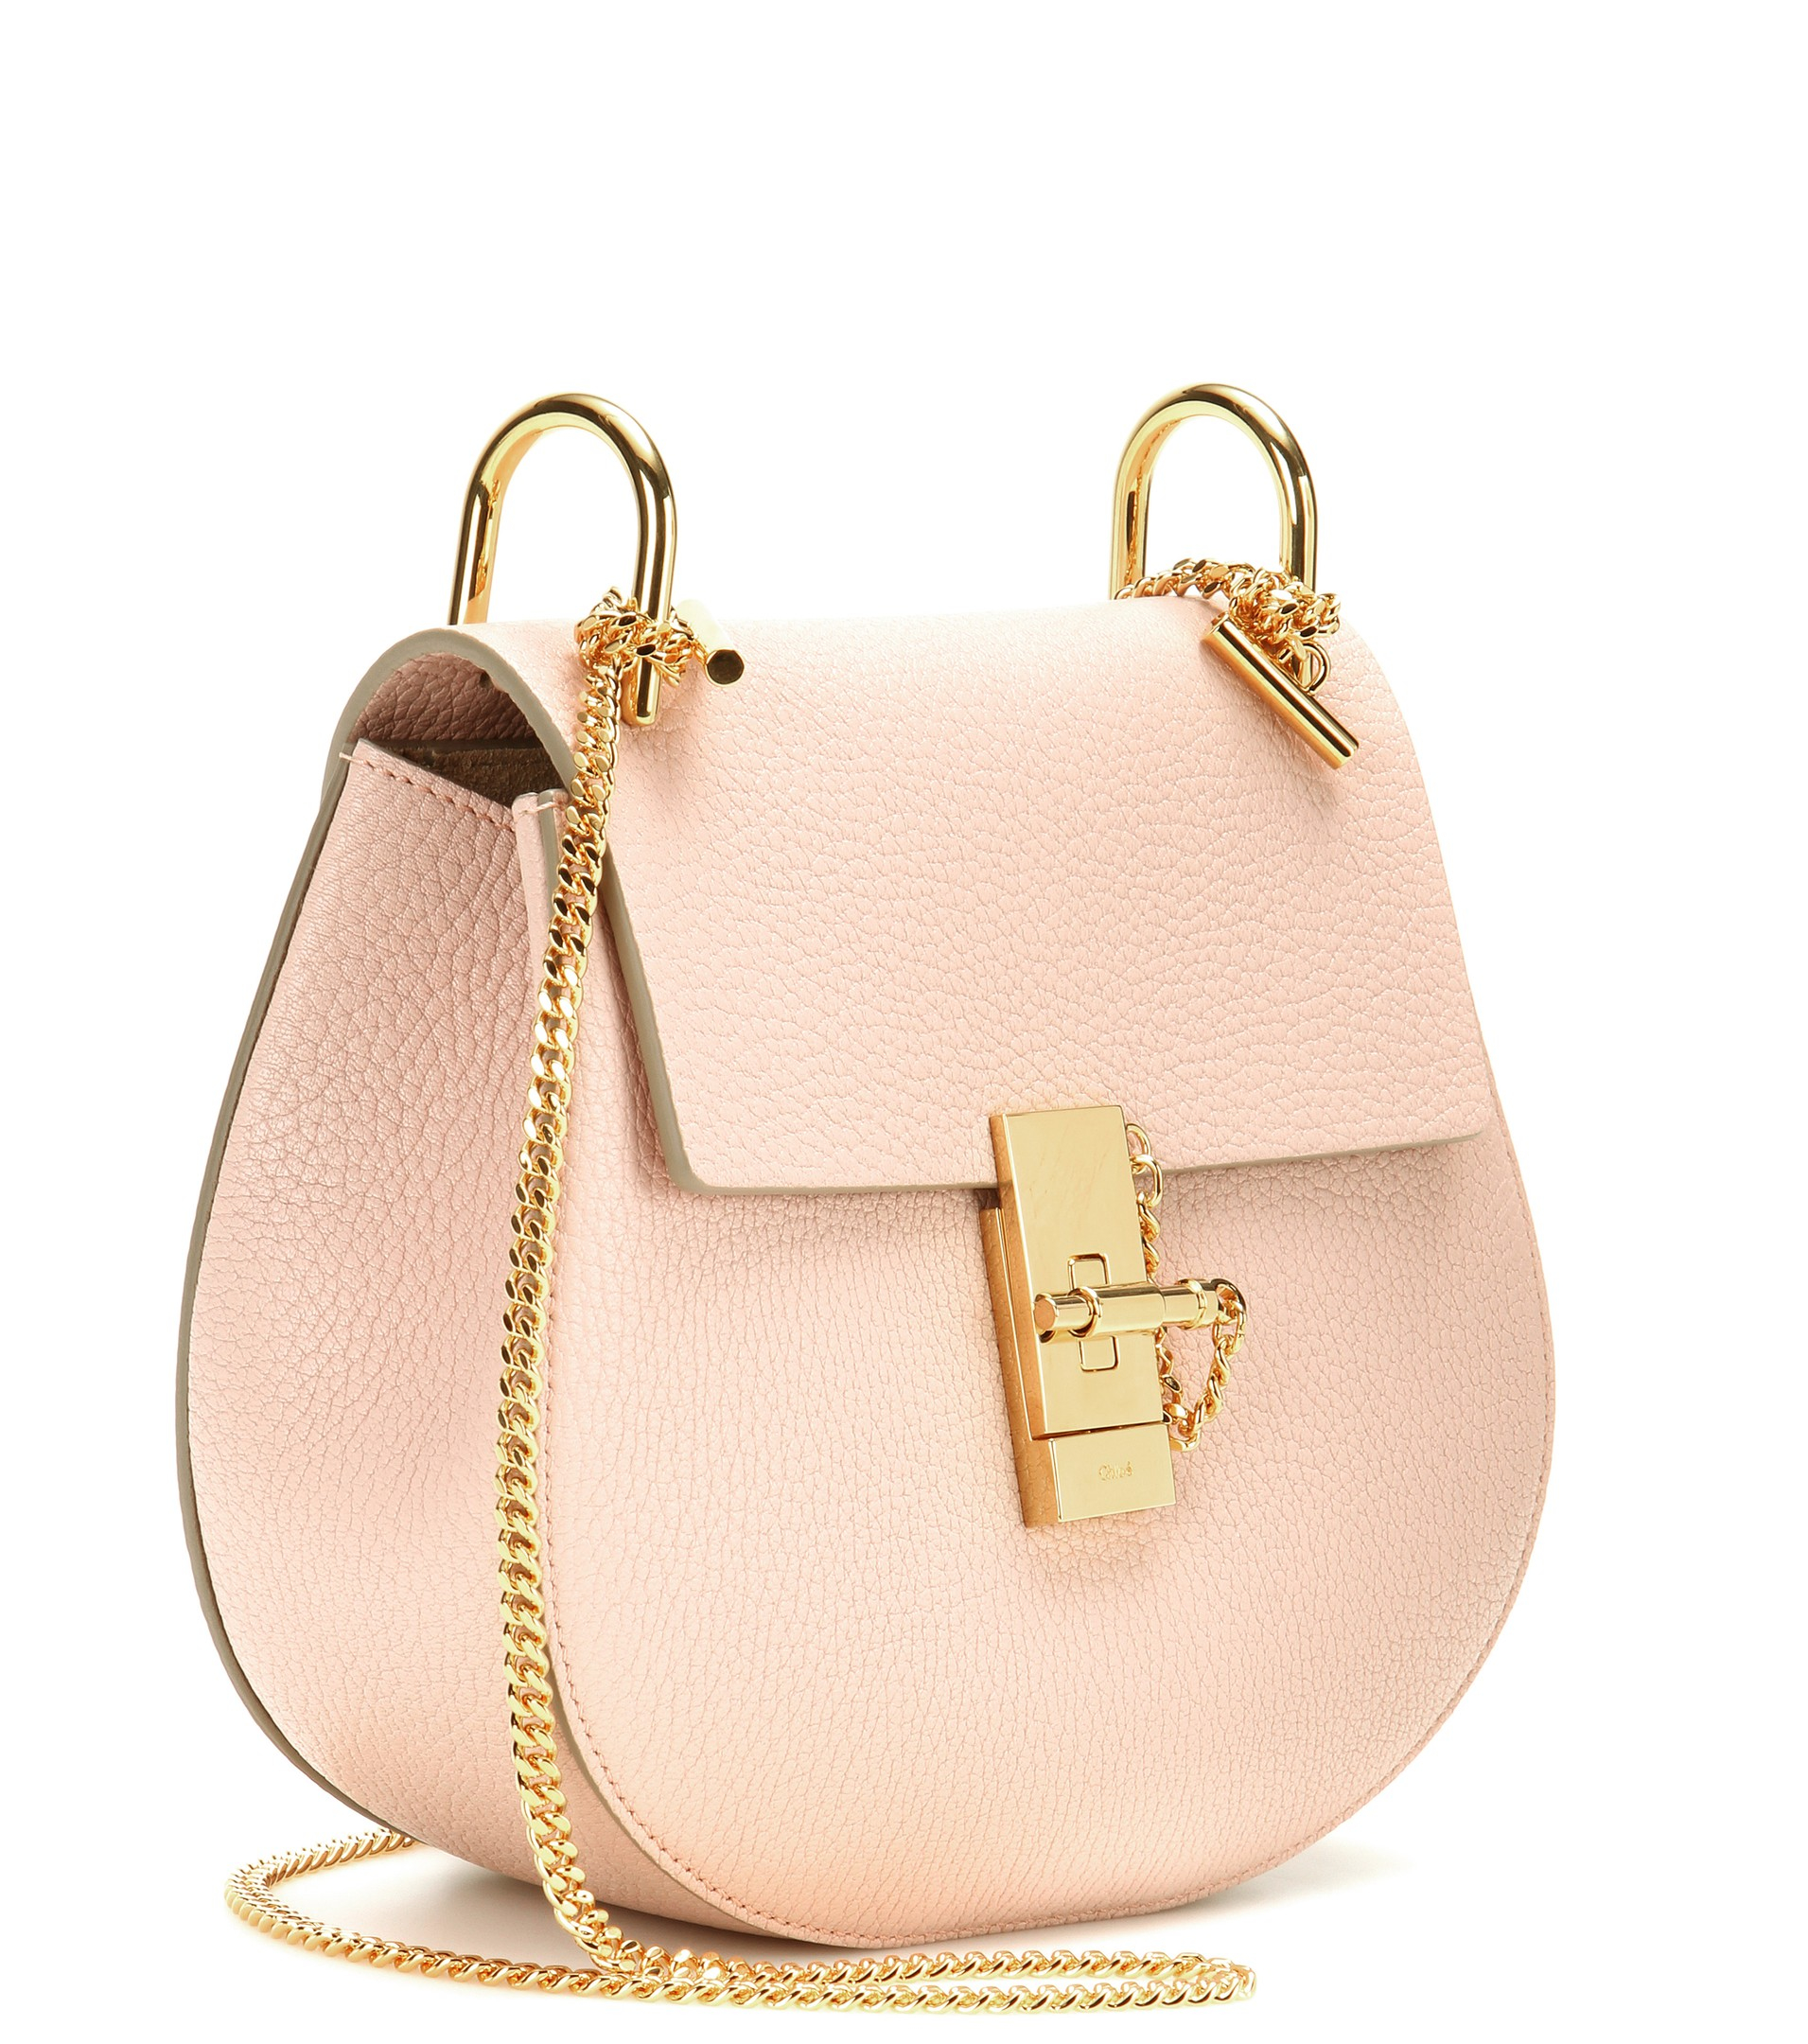 chloe handbags replica uk - Chlo Drew Small Leather Shoulder Bag in Pink (Cement Pink) | Lyst